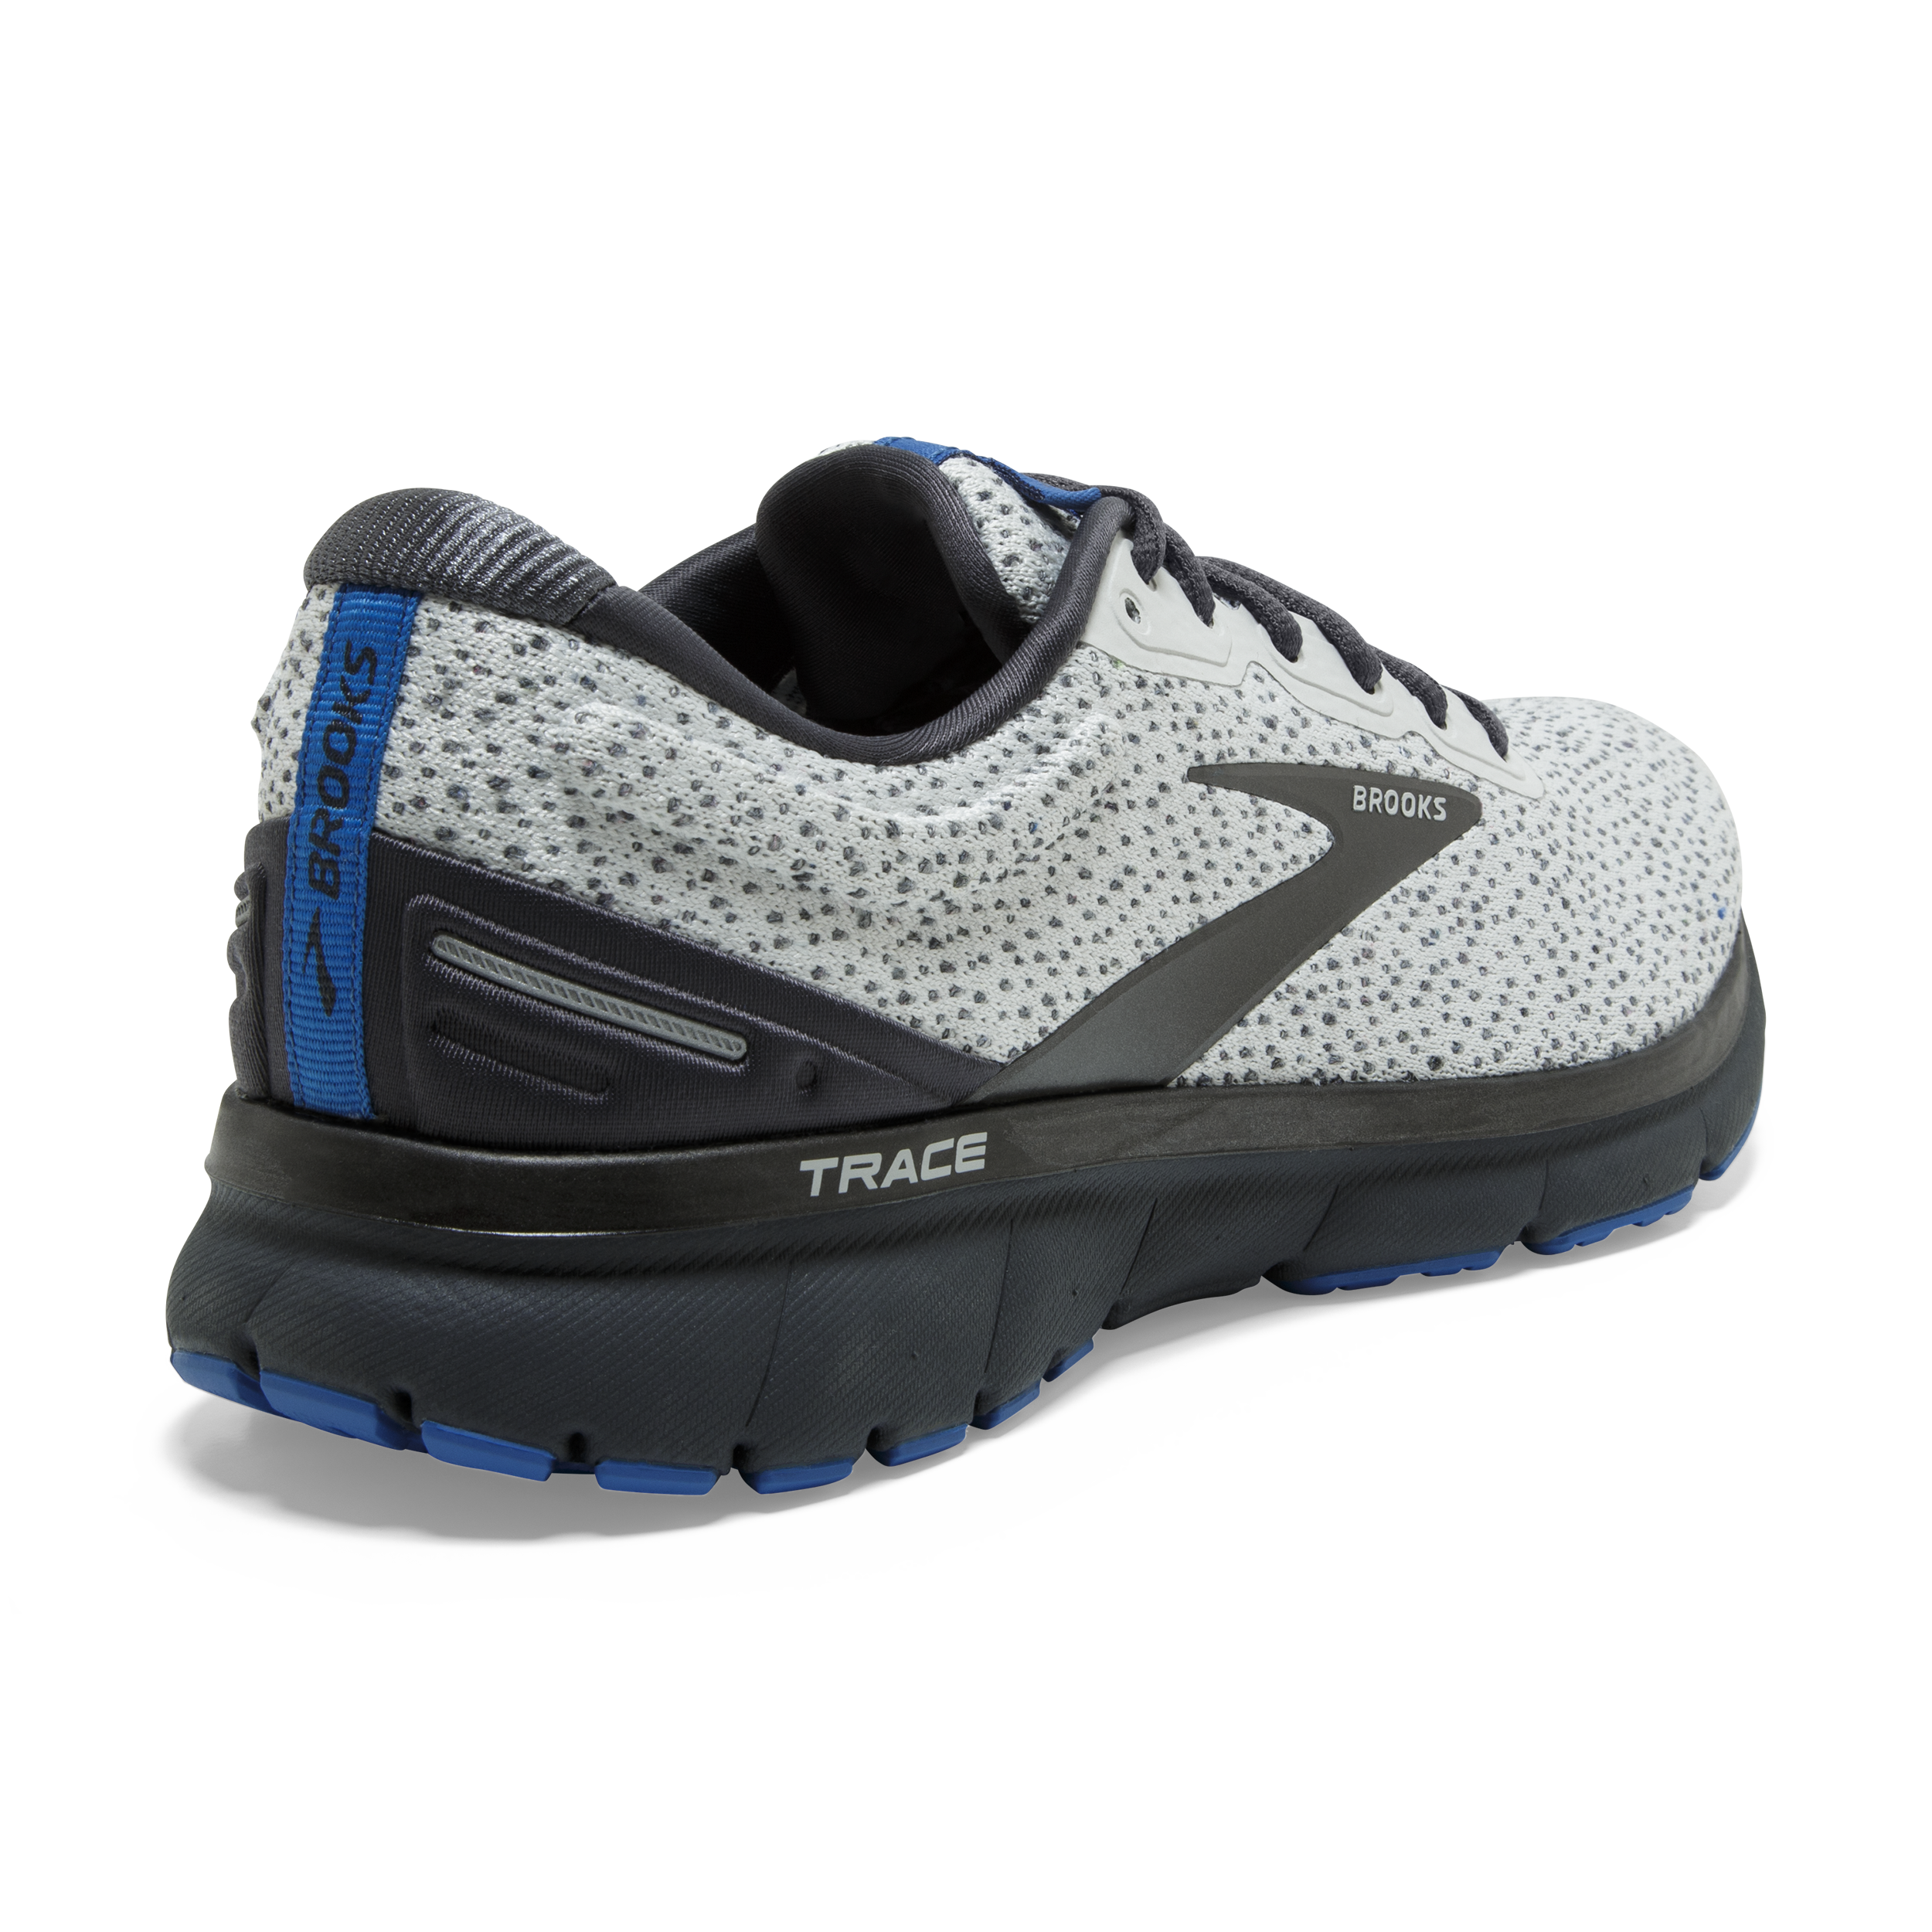 NIB Brooks Men's Dyad 9 Running Shoes Asphalt/Electric Blue/Black 8.5 2E W US 